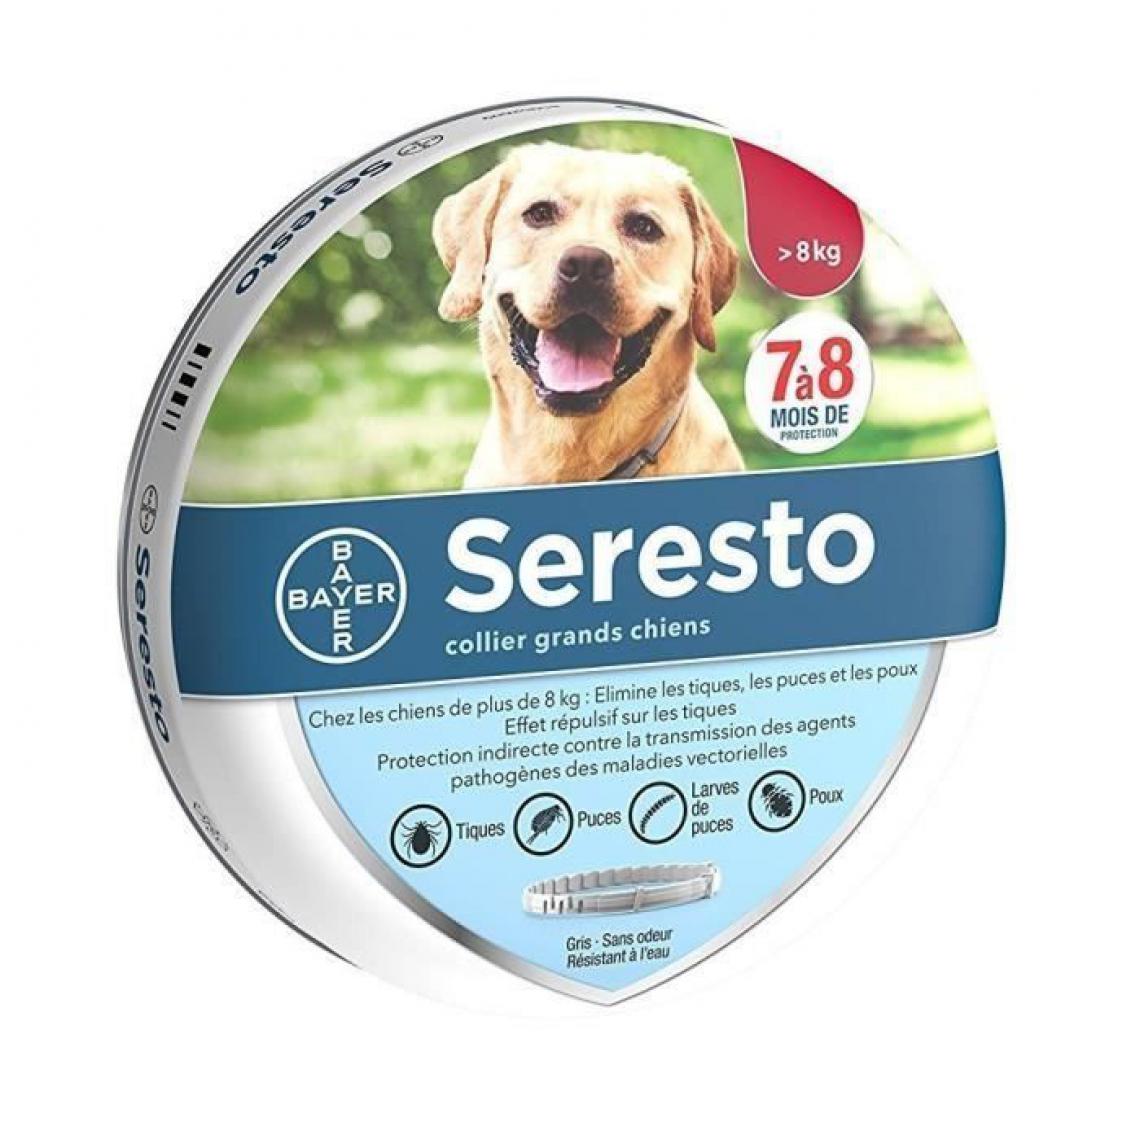 Seresto - SERESTO Collier antiparasitaire - Pour grand chien - Anti-parasitaire pour chien